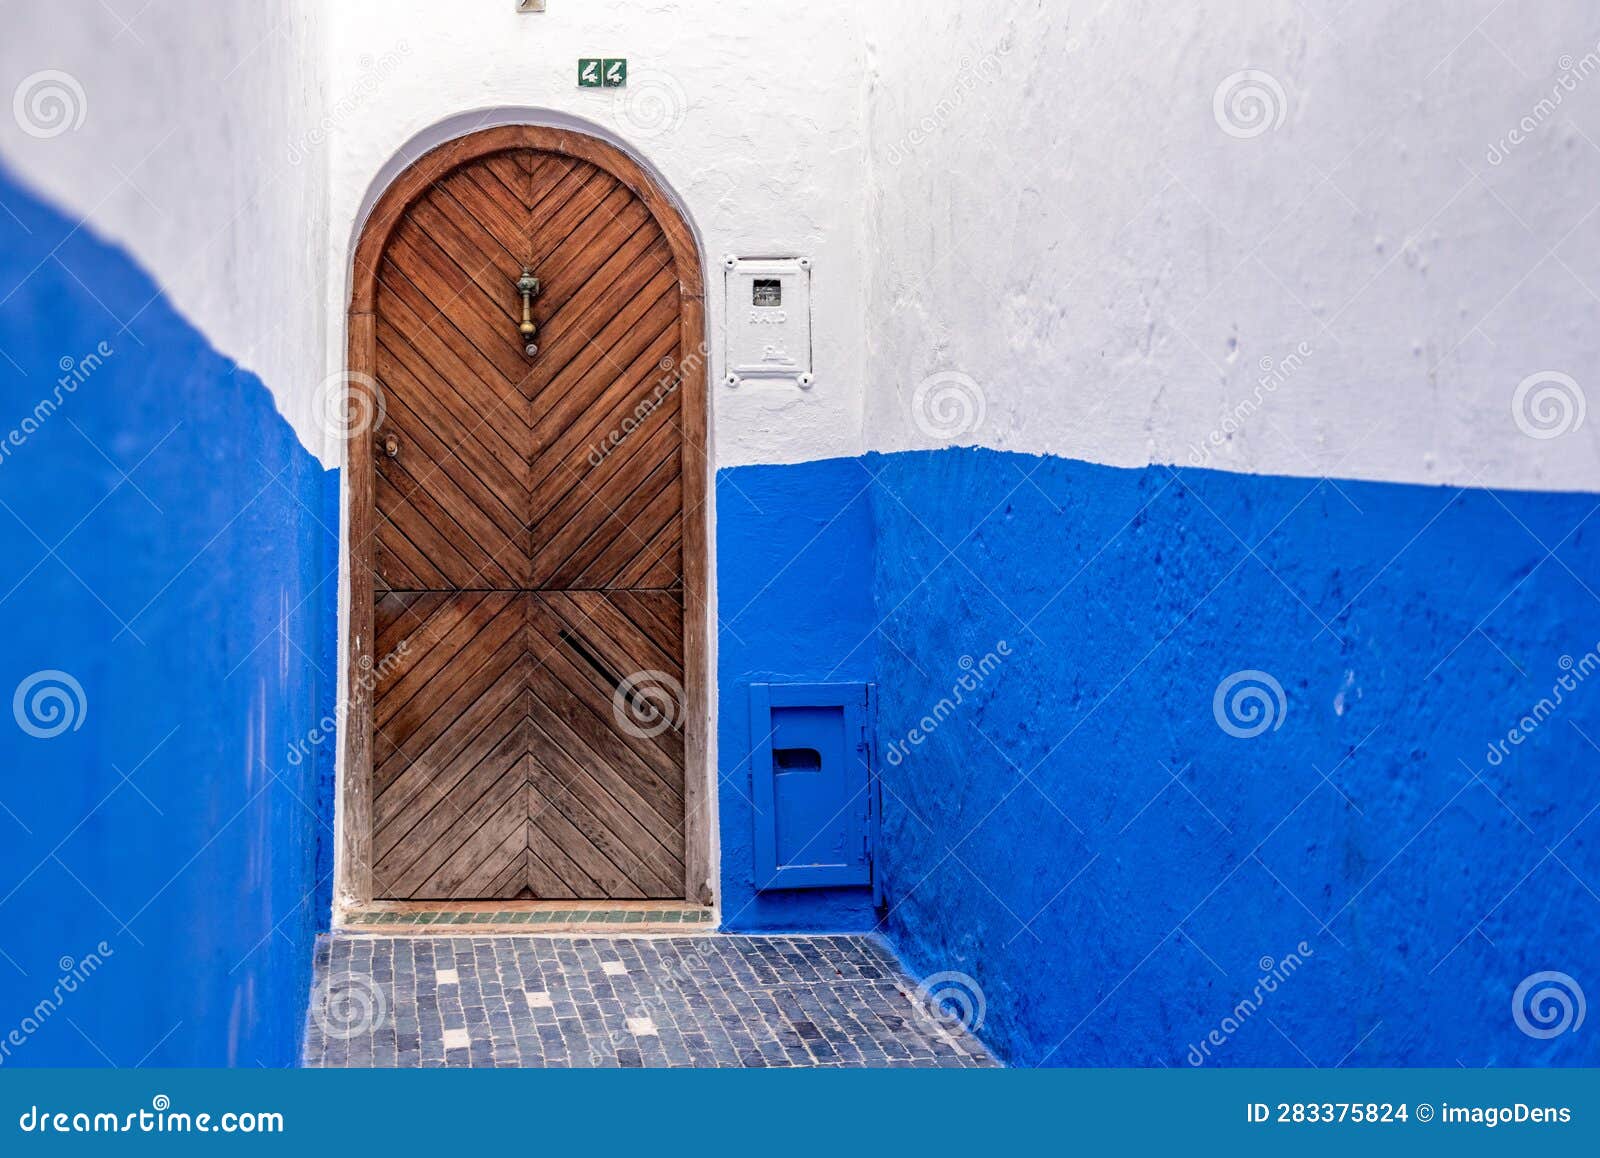 typical doors in arabian style in morrocco